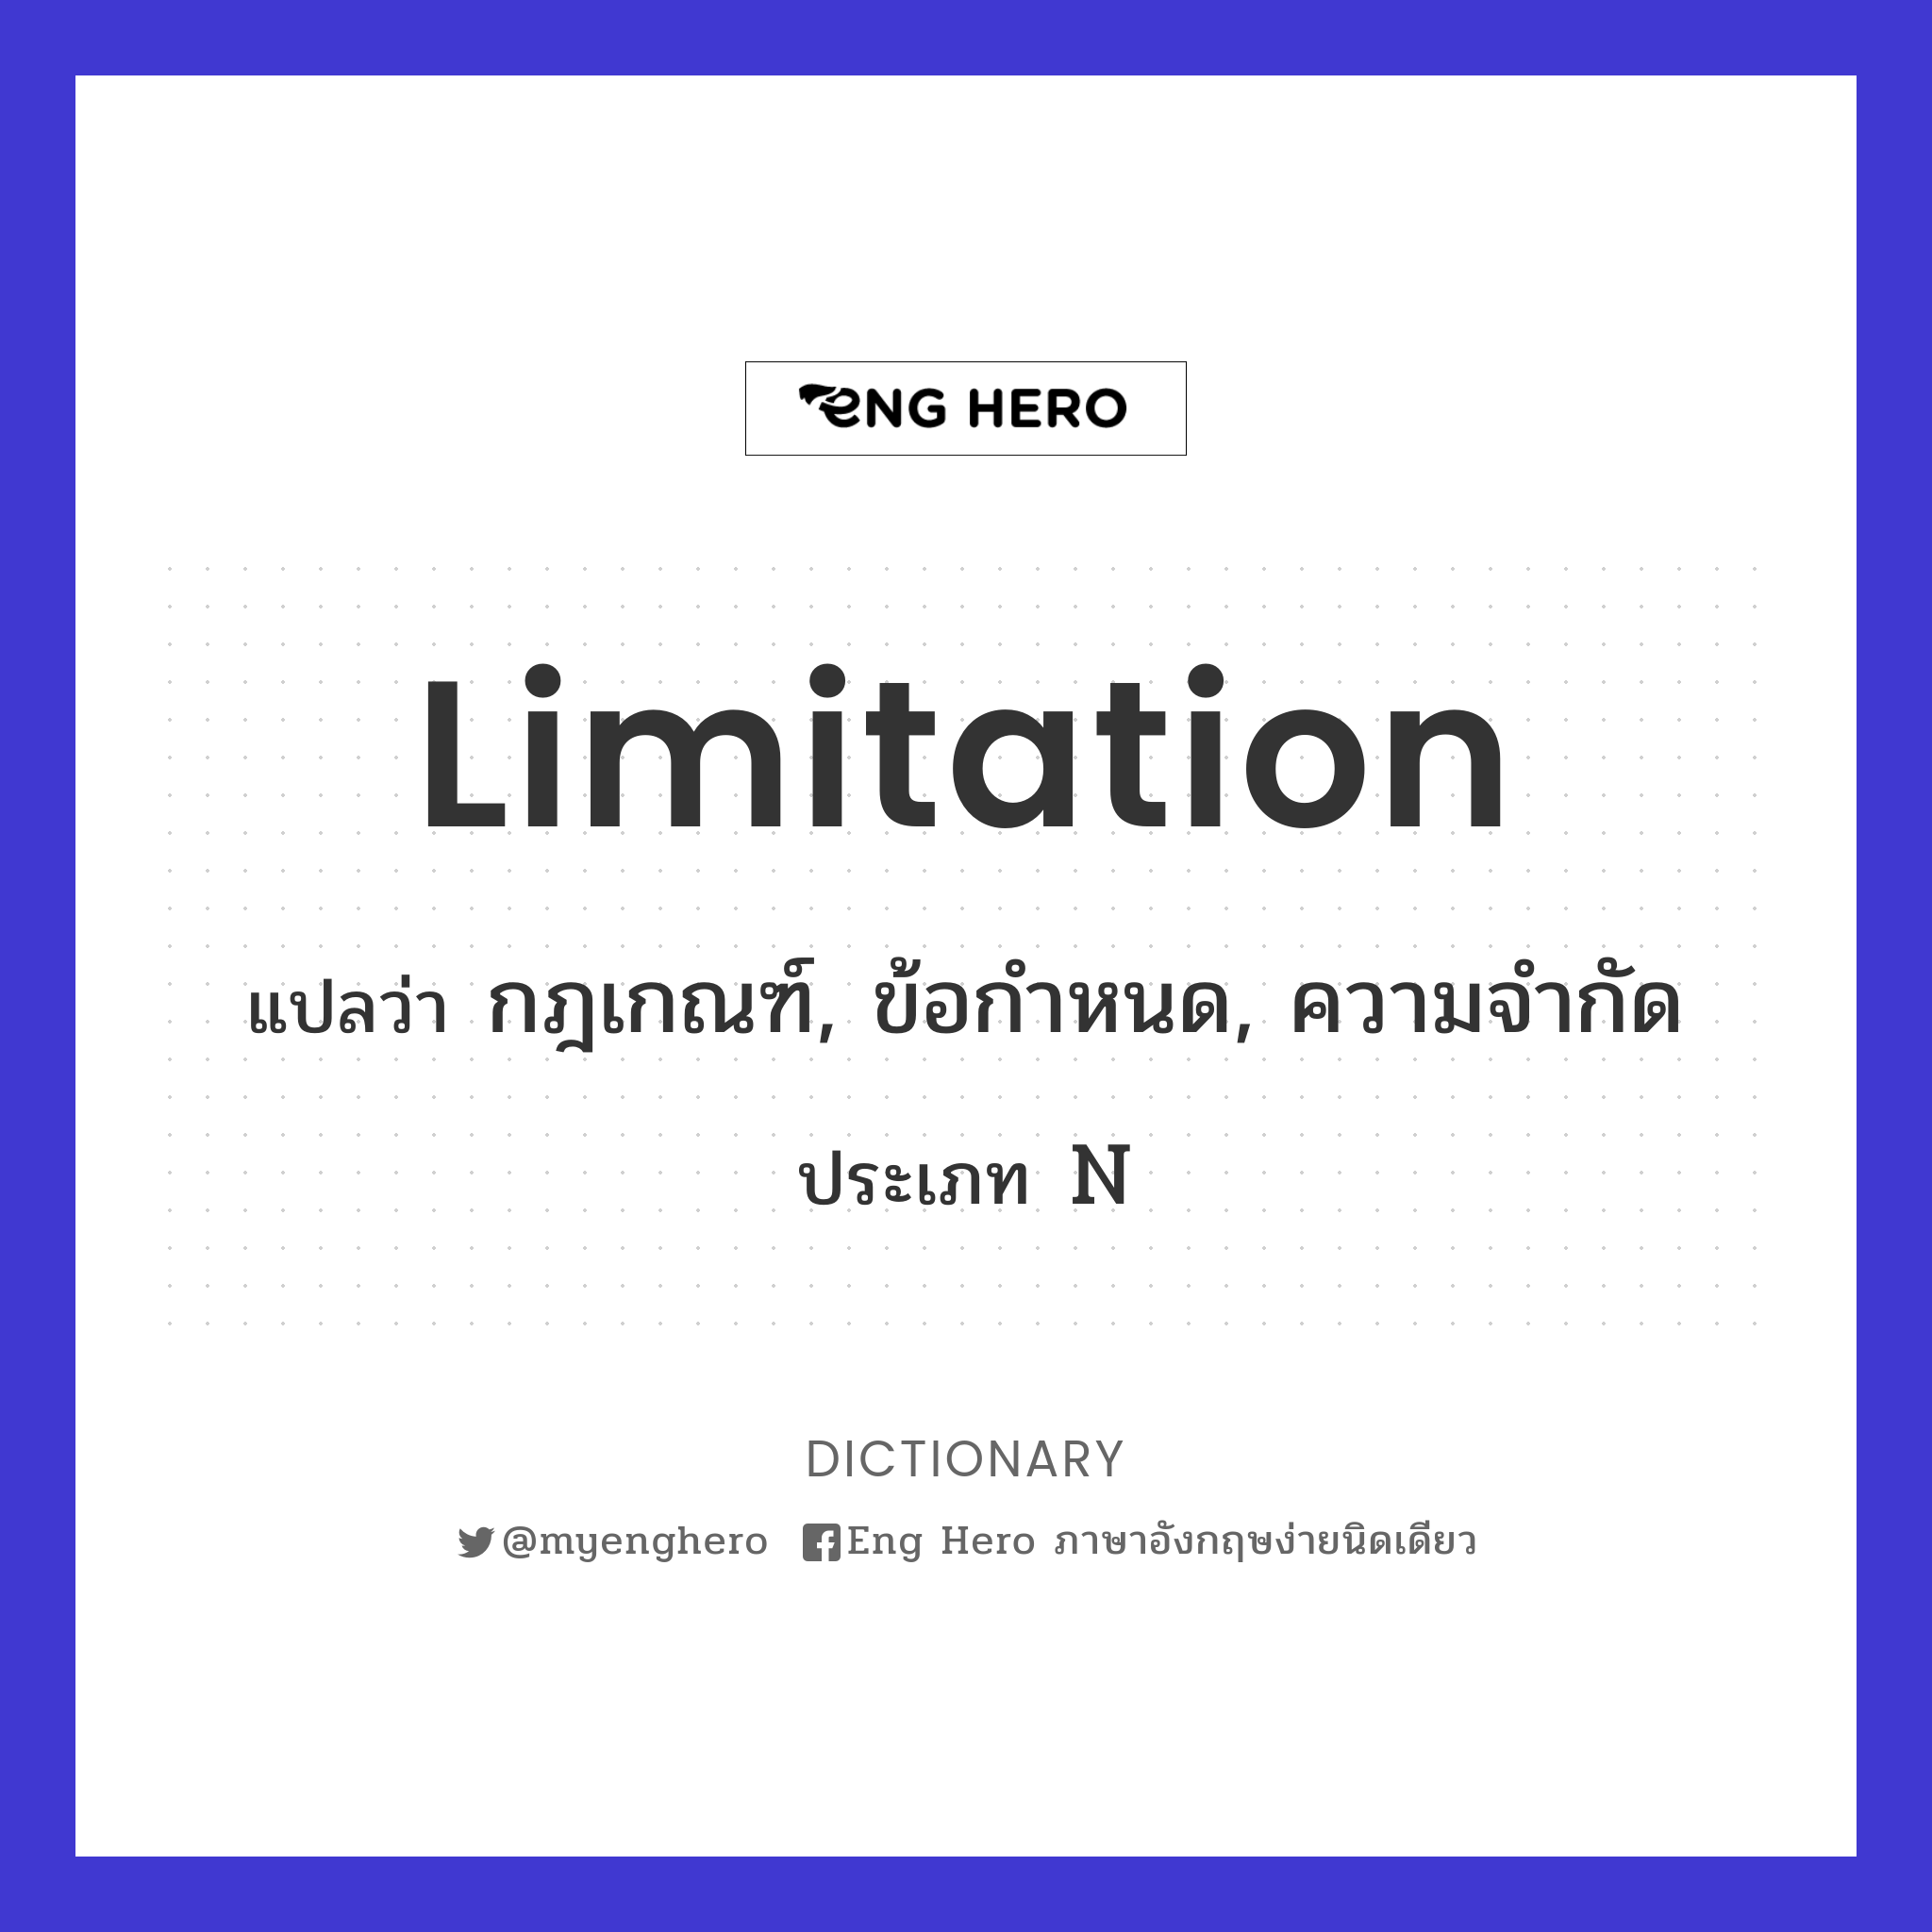 limitation